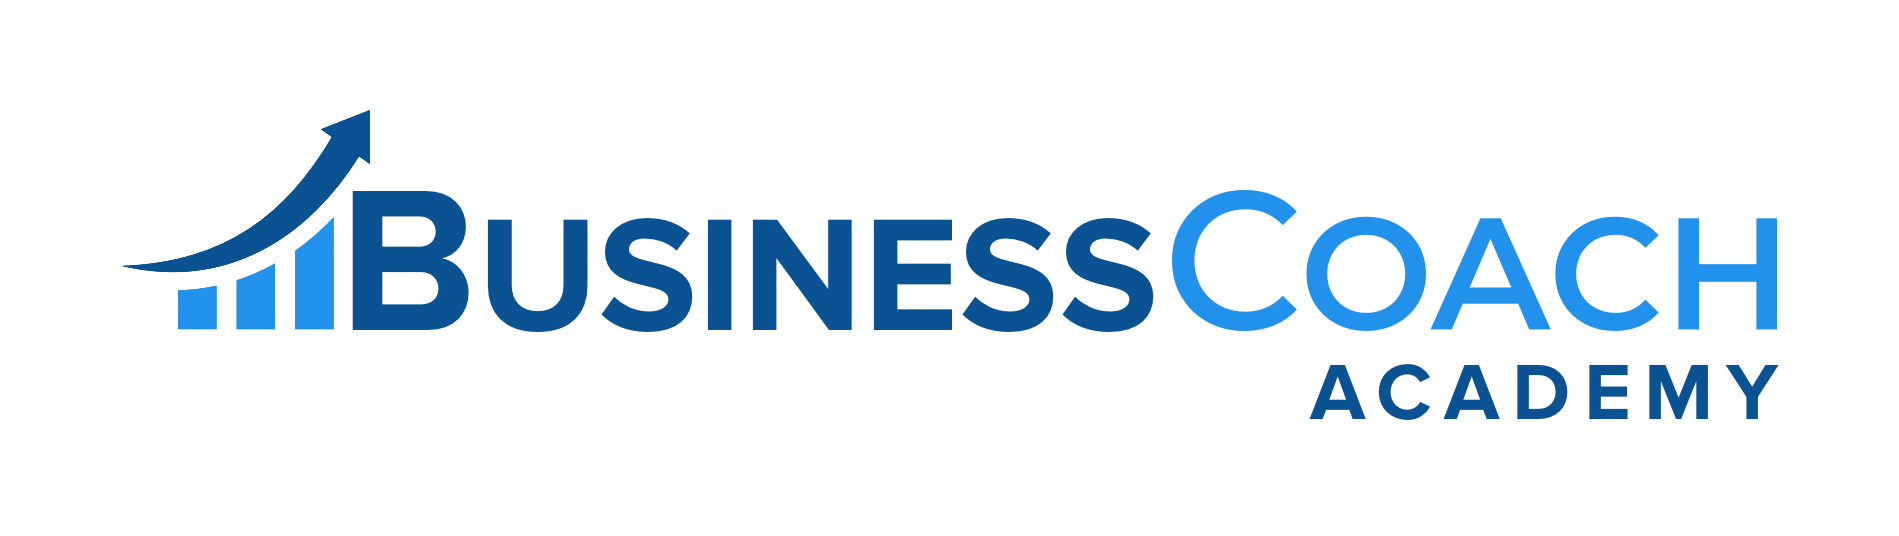 Business Coach Academy logo